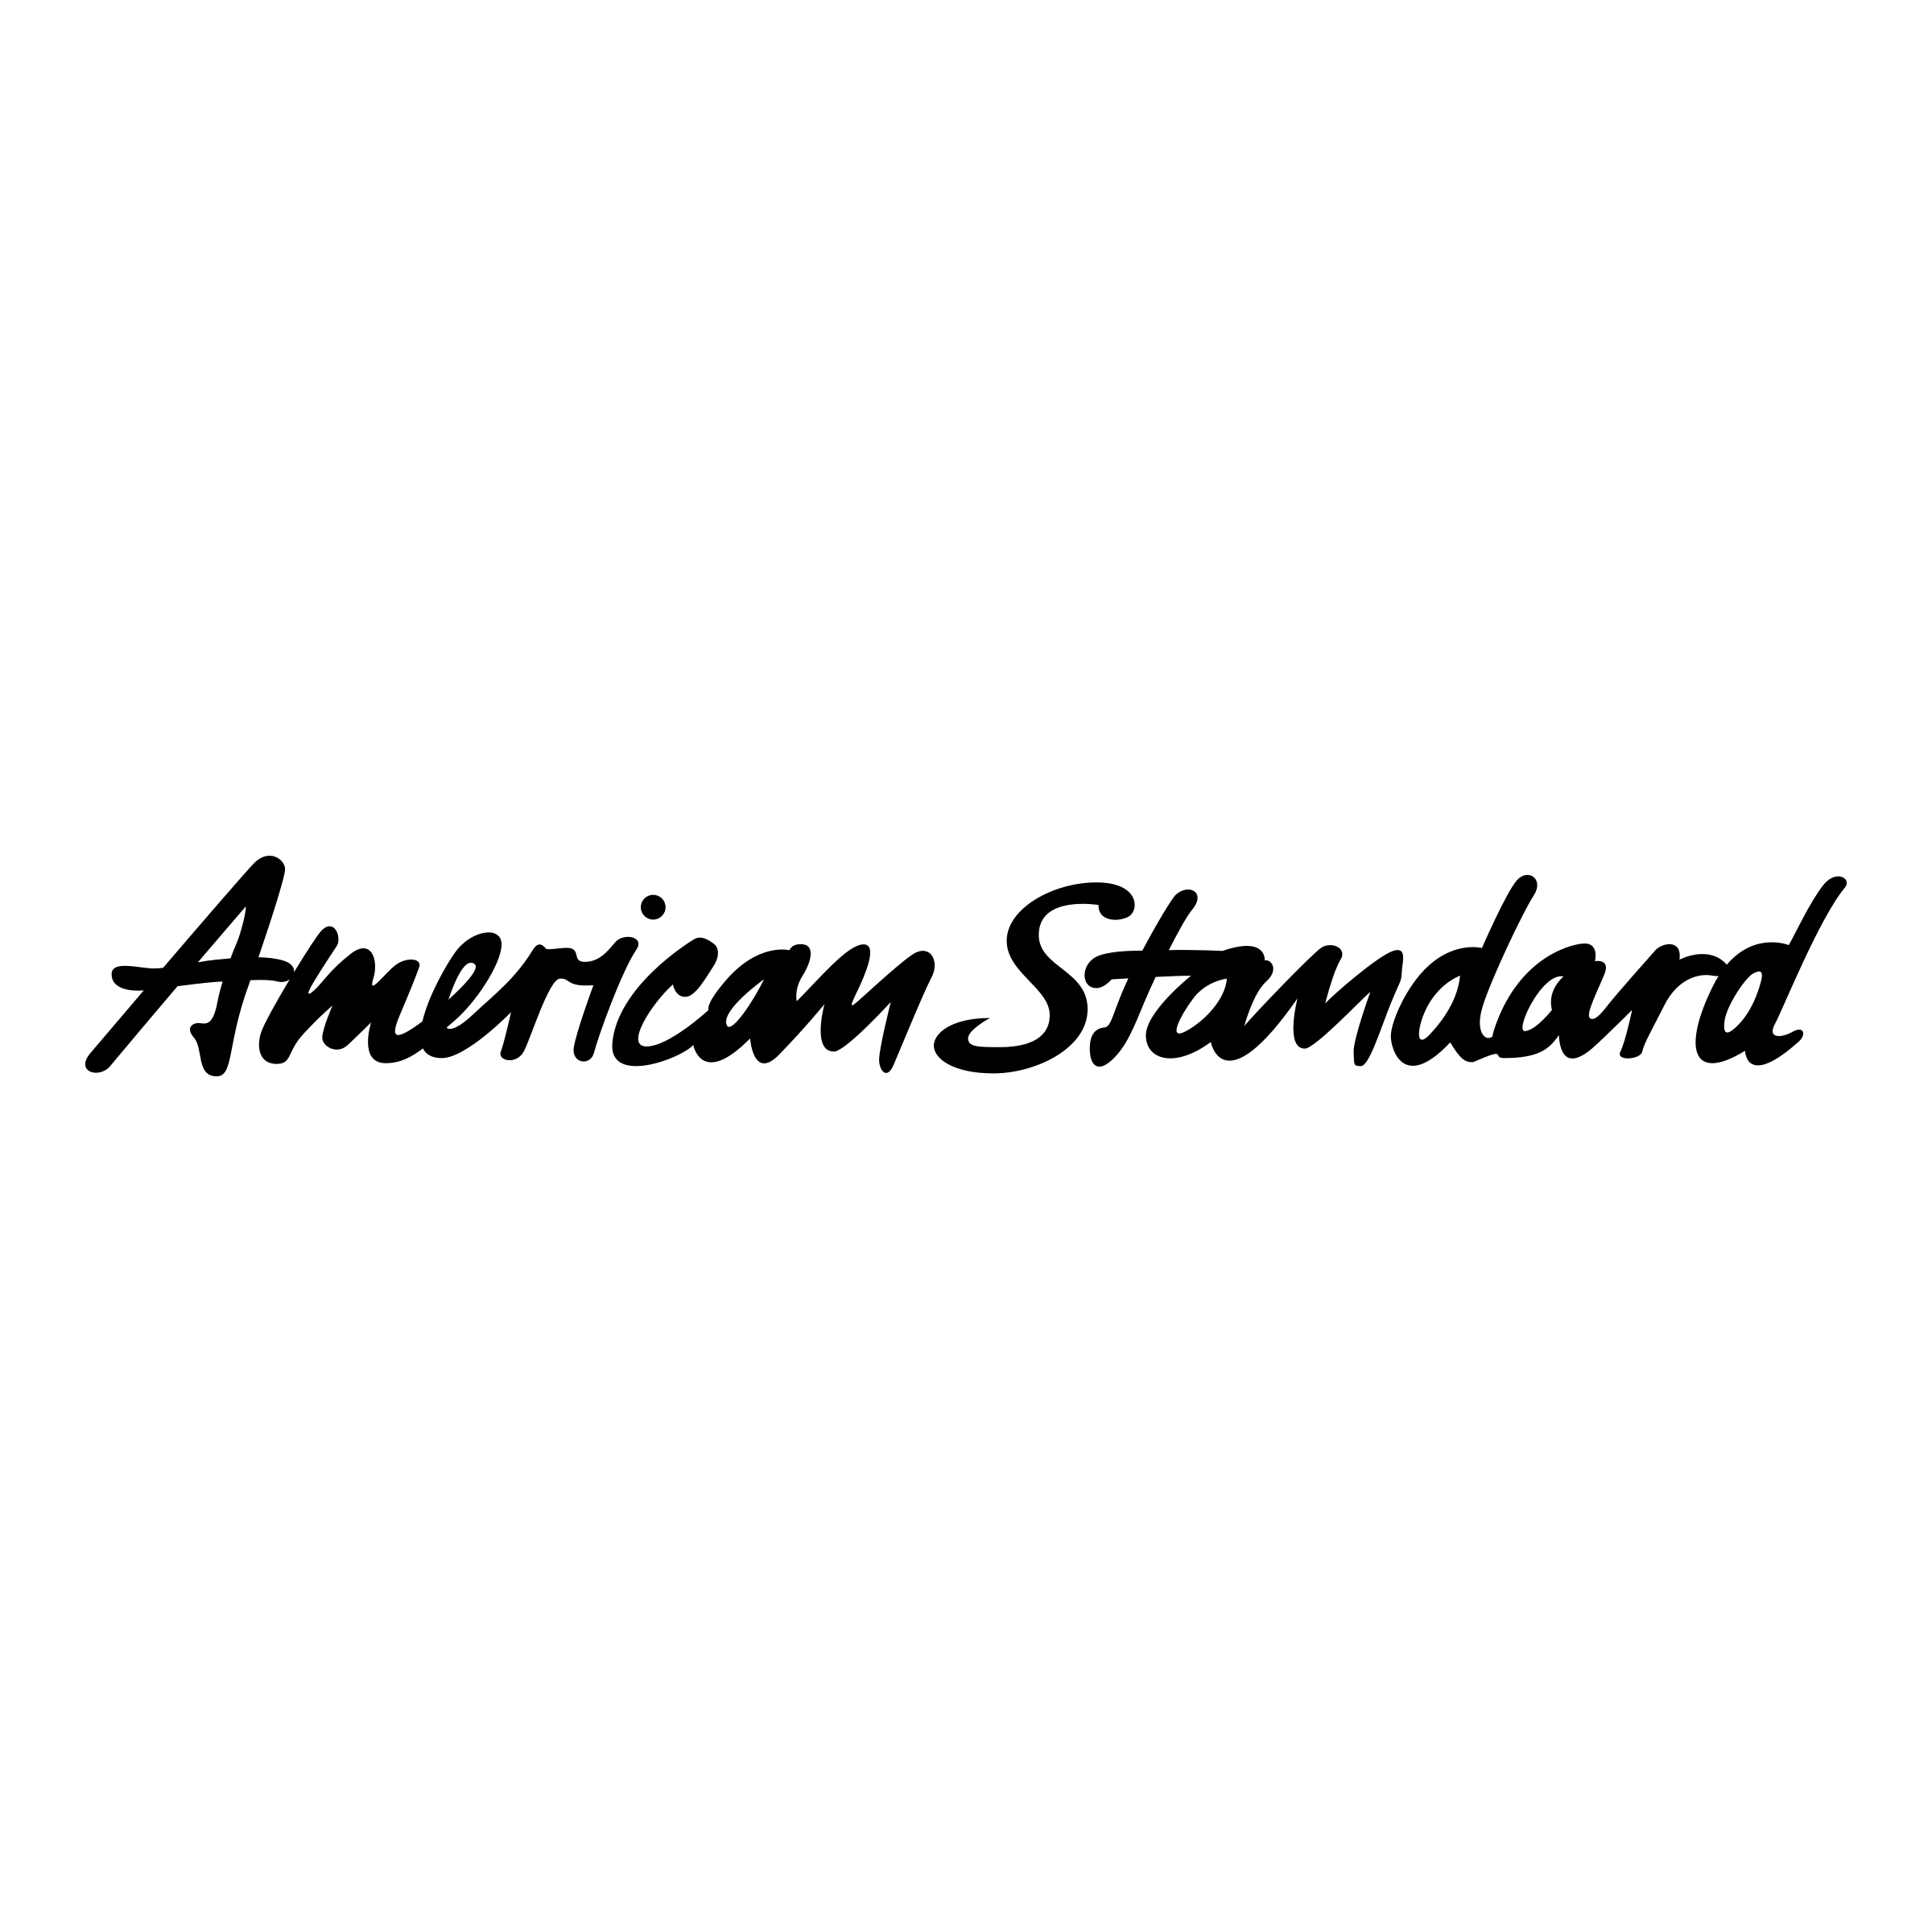 American Standard Logo - American Standard Logo PNG Transparent & SVG Vector - Freebie Supply